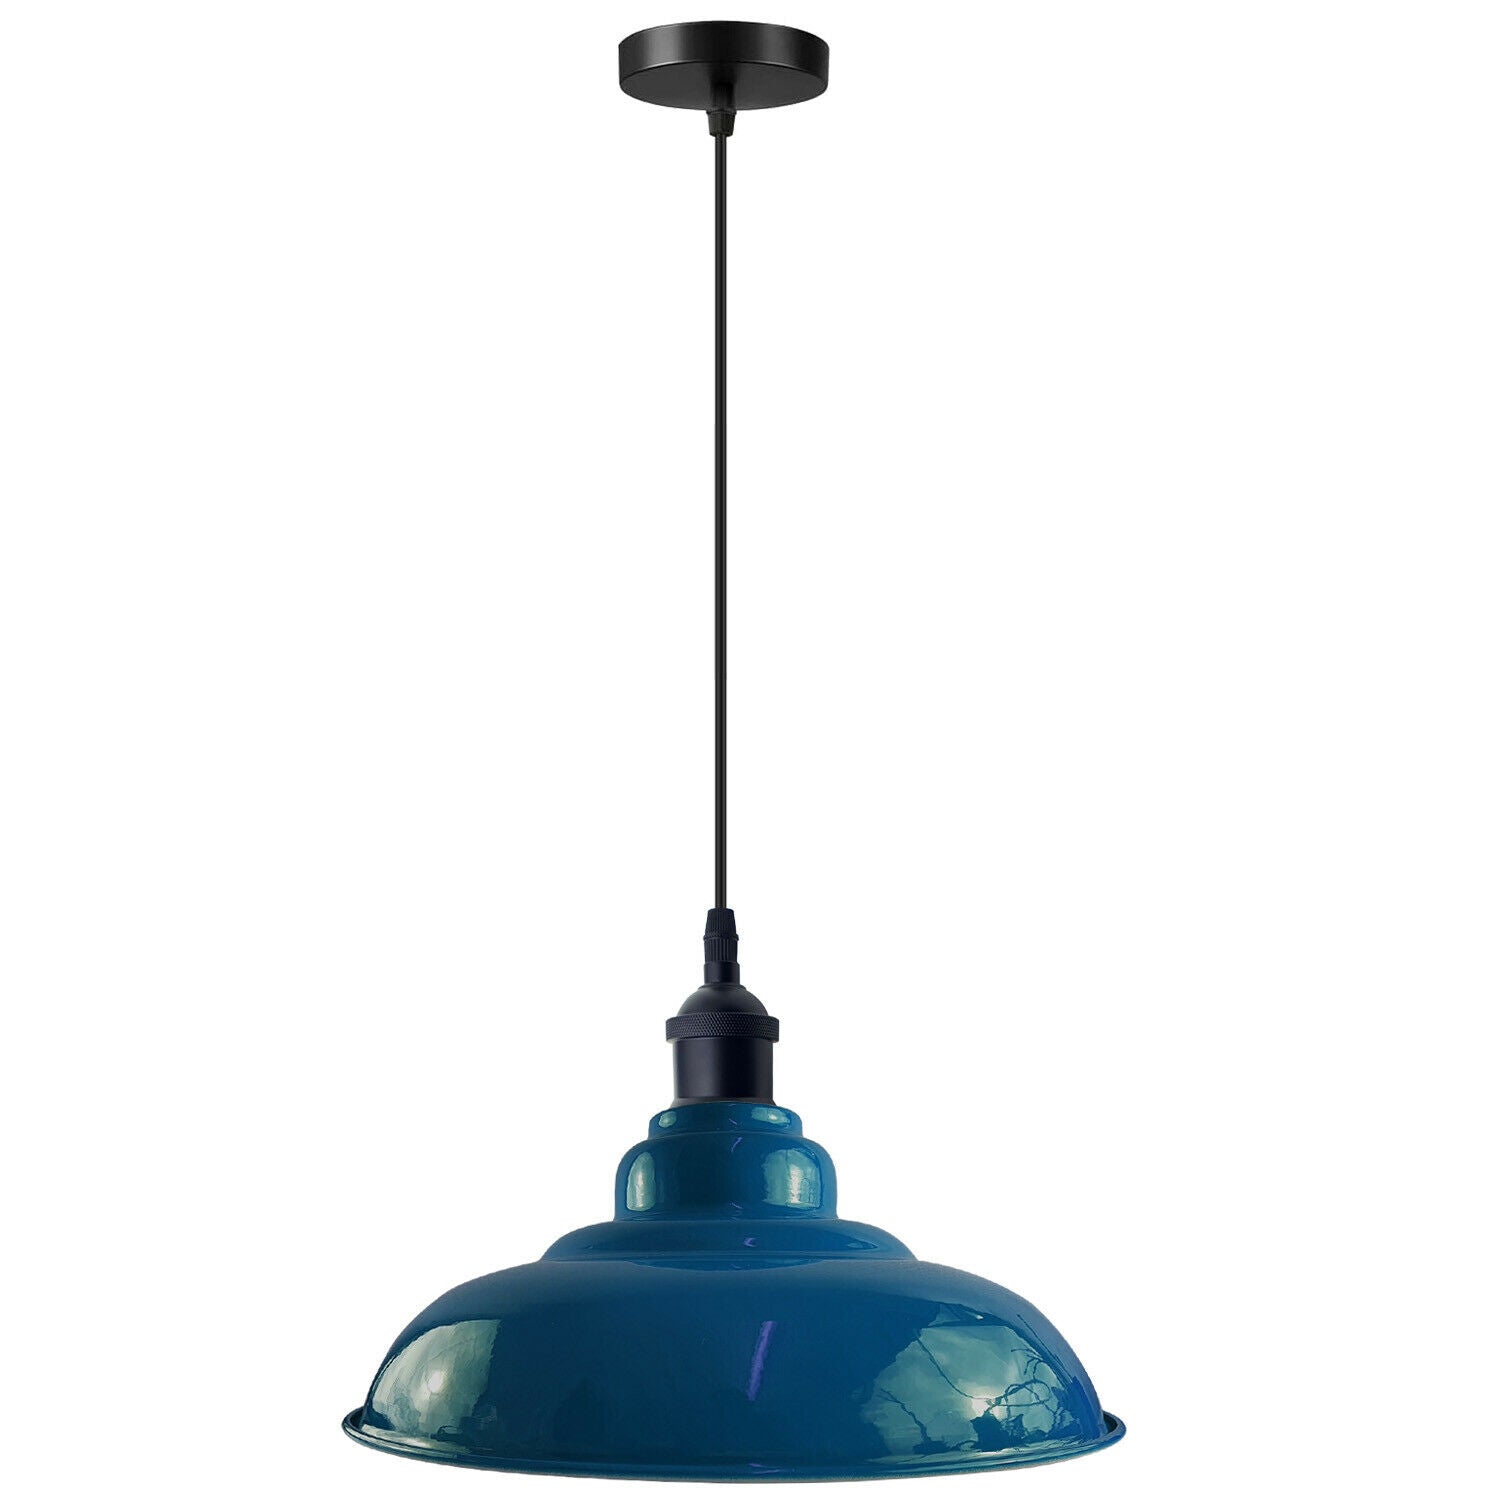 LEDSone industrial Vintage  32cm Cyan BluePendant Retro Metal Lamp Shade E27 Uk Holder~3687 - LEDSone UK Ltd